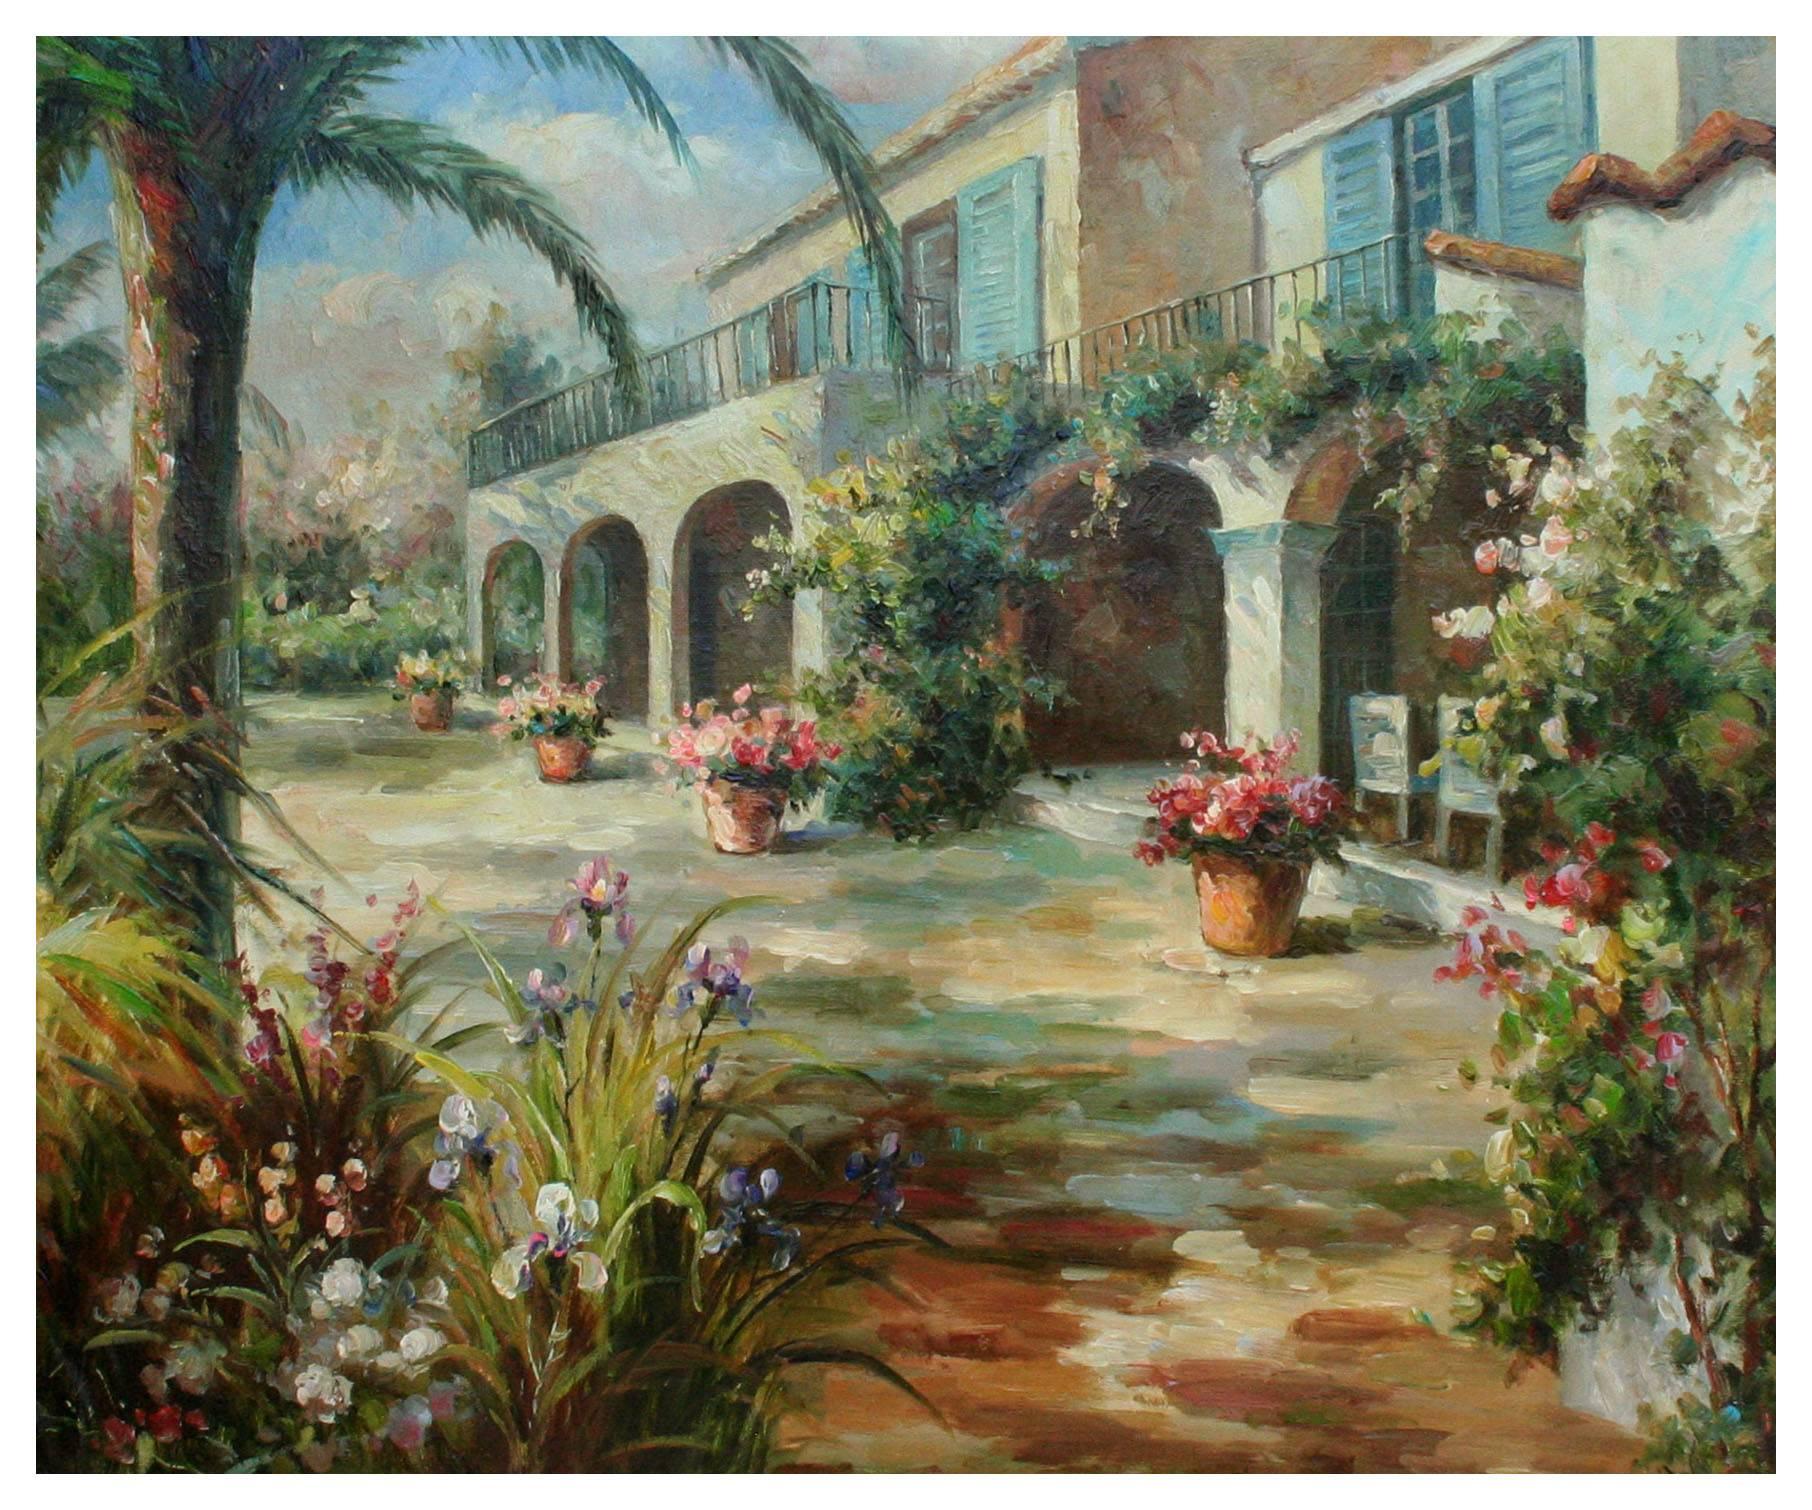 Vintage Palm Beach Courtyard Garden Landscape - Painting by Unknown